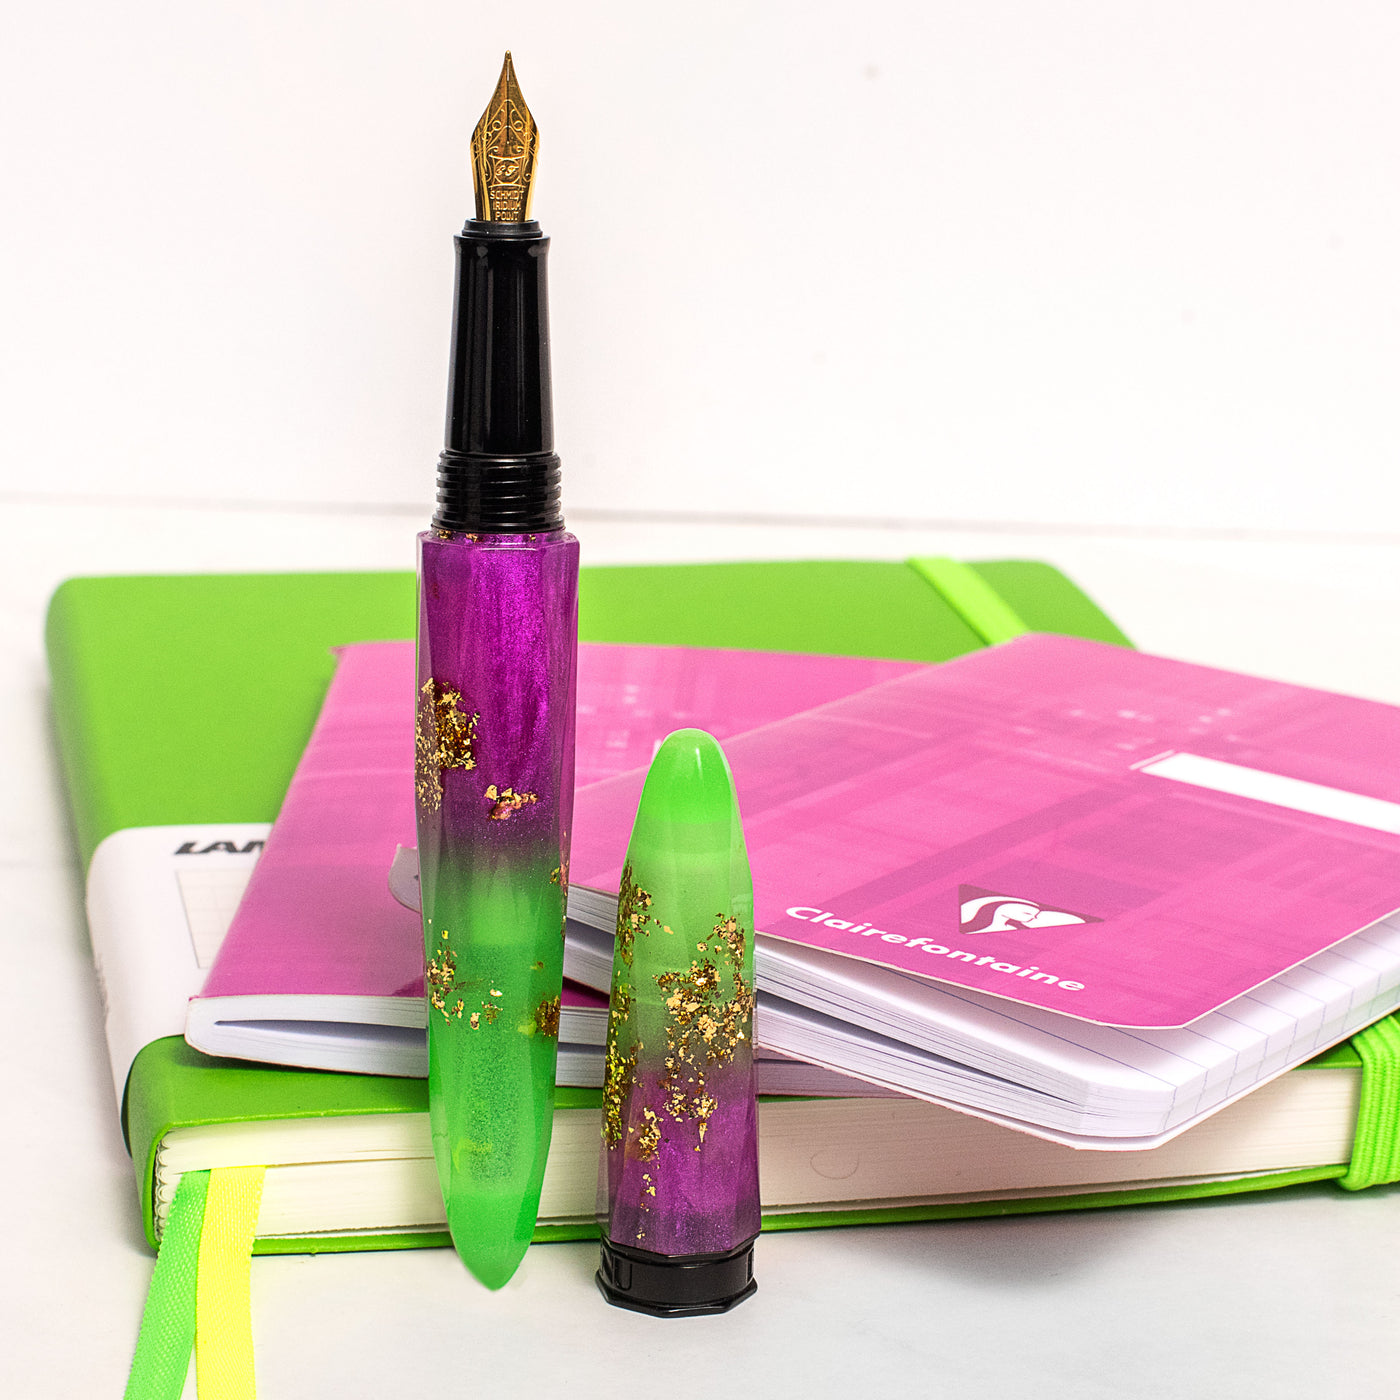 Briolette Luminous Neon Fountain Pen